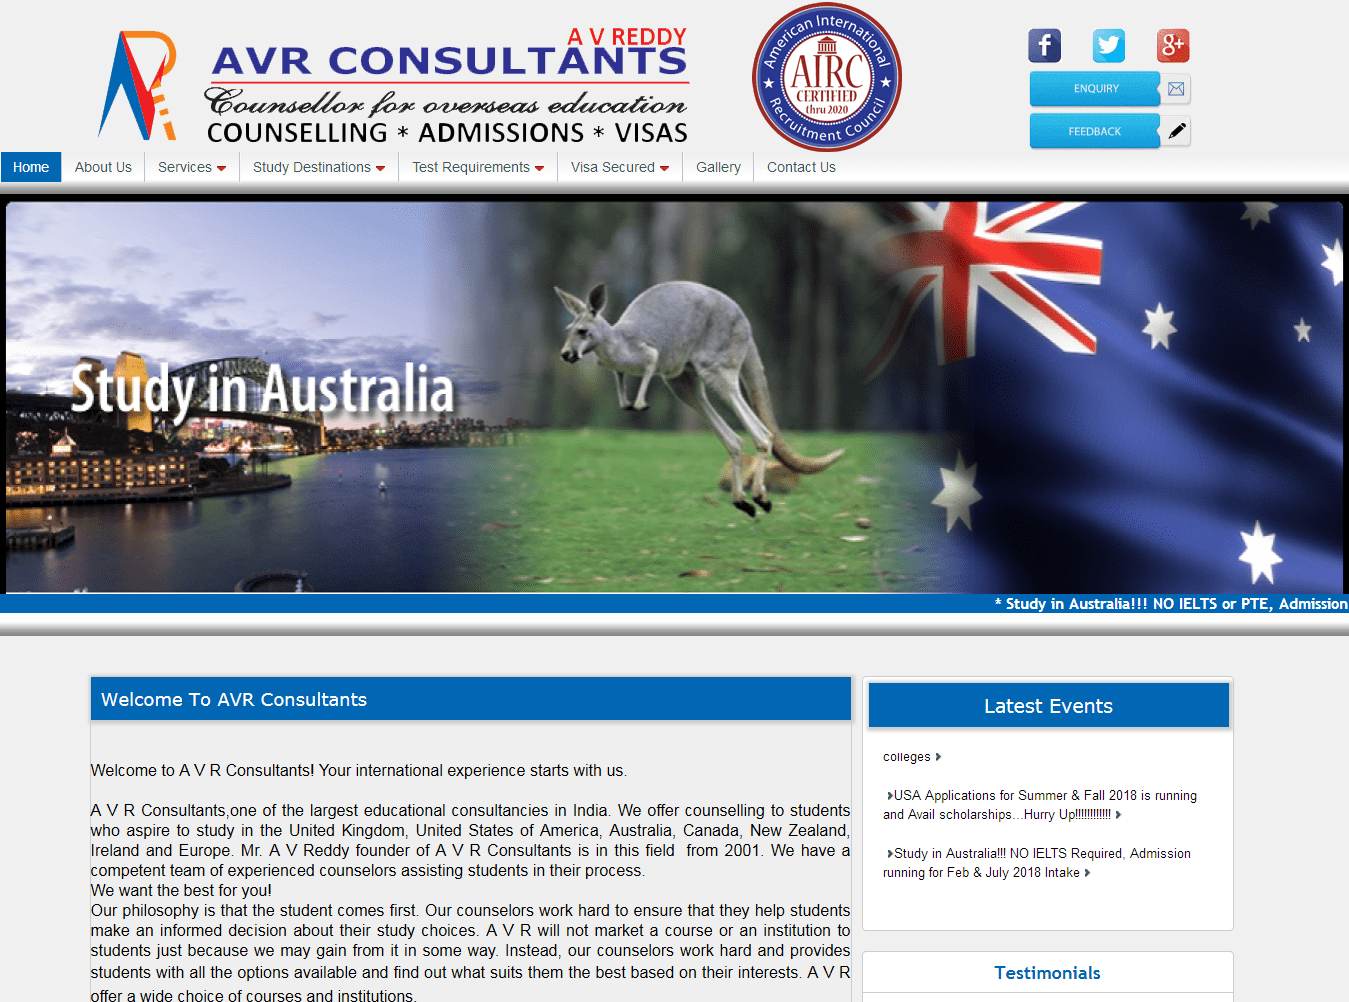 AVR Consultants